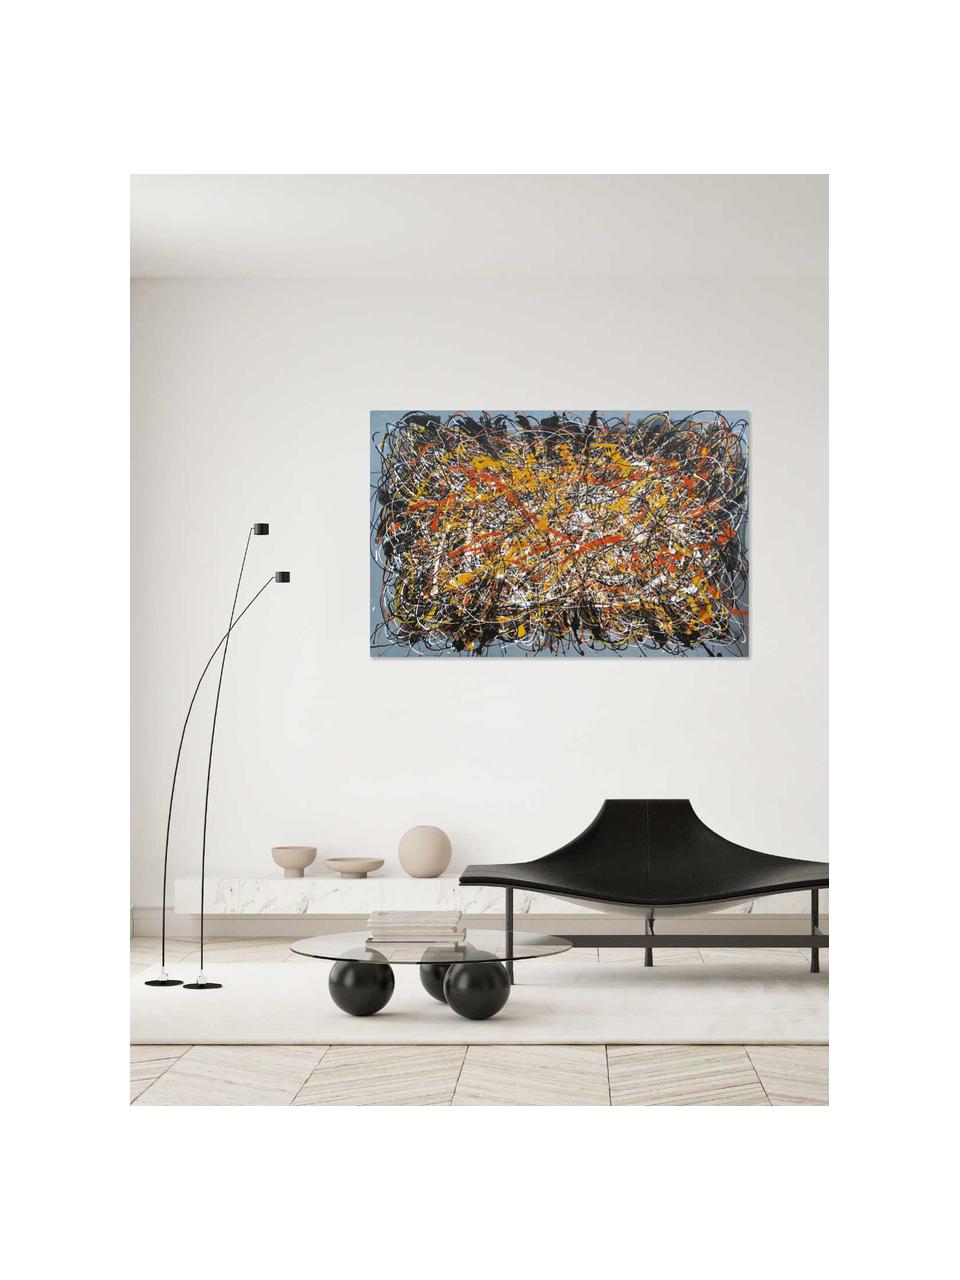 Handgemaltes Leinwandbild Omaggio a Pollock, Dunkelgrau, Mehrfarbig, B 150 x H 100 cm